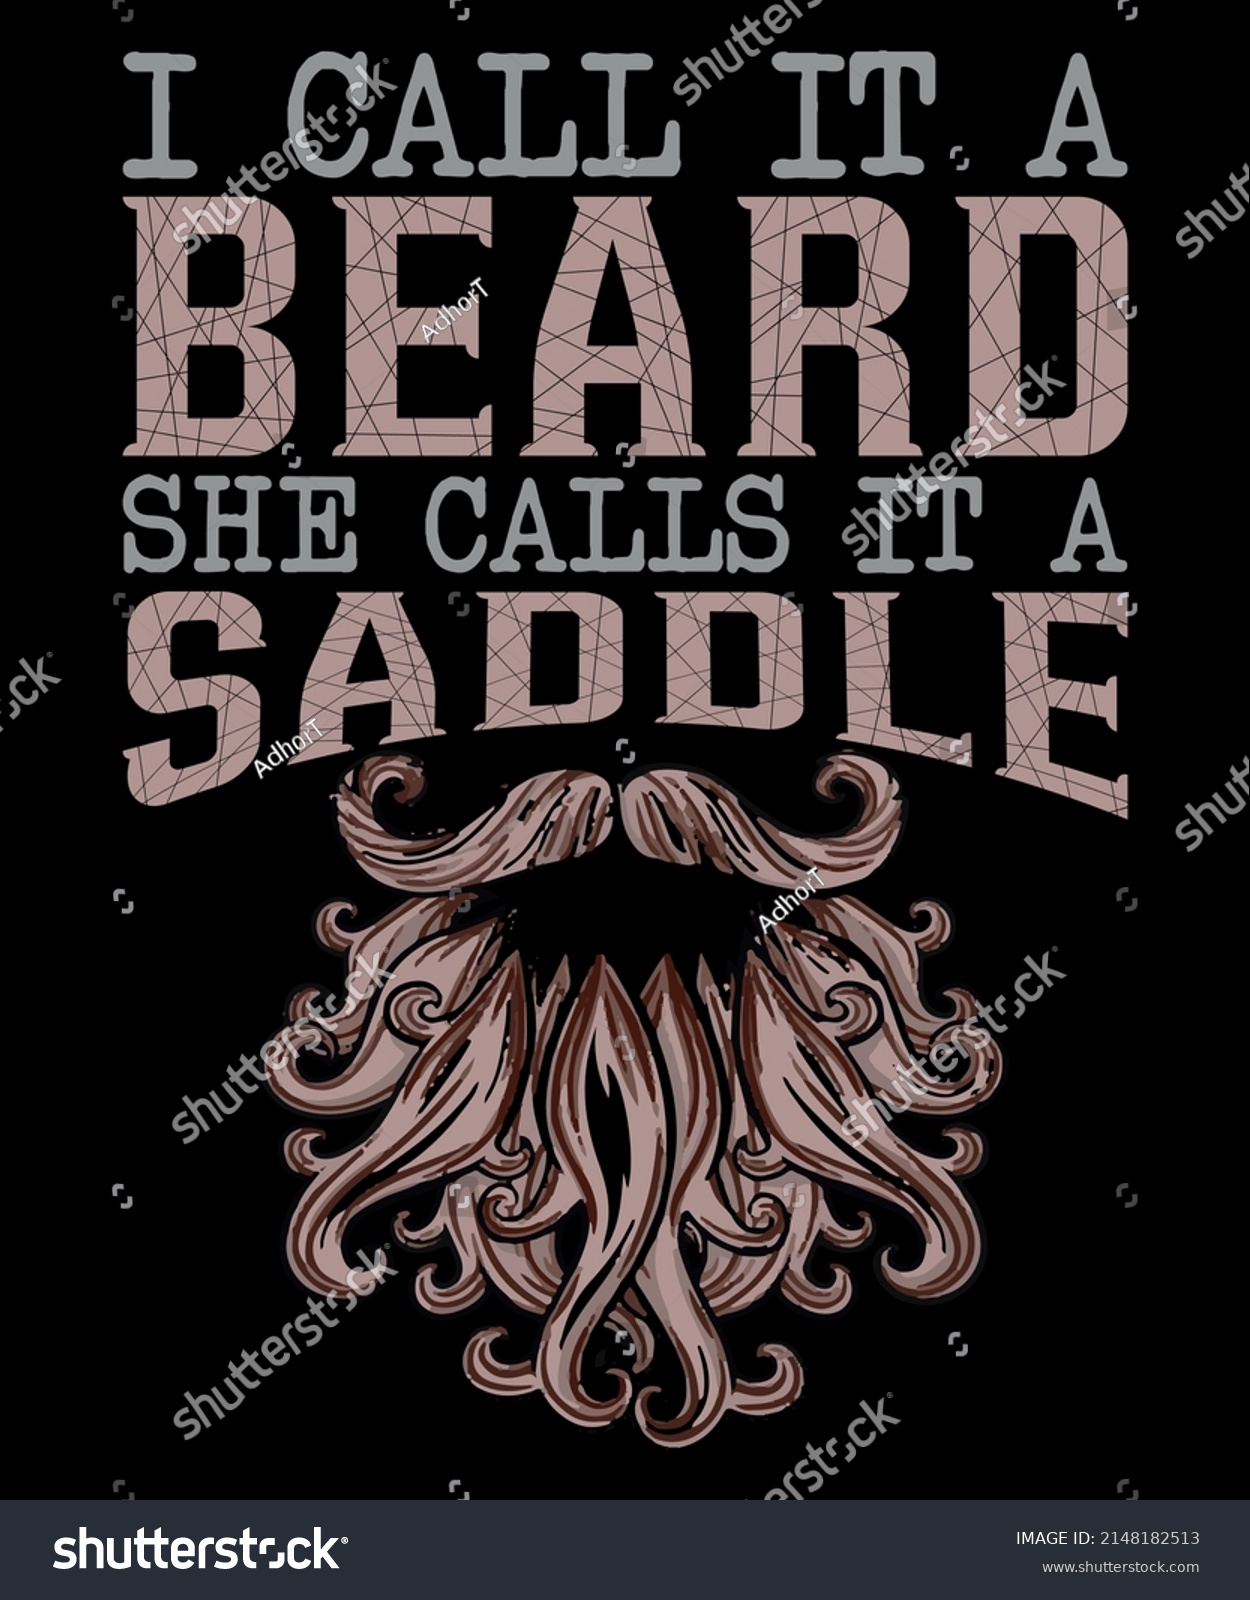 SVG of I Call It A Beard She Calls It A Saddle T-Shirt Men's Funny Beard Humor T-shirt svg